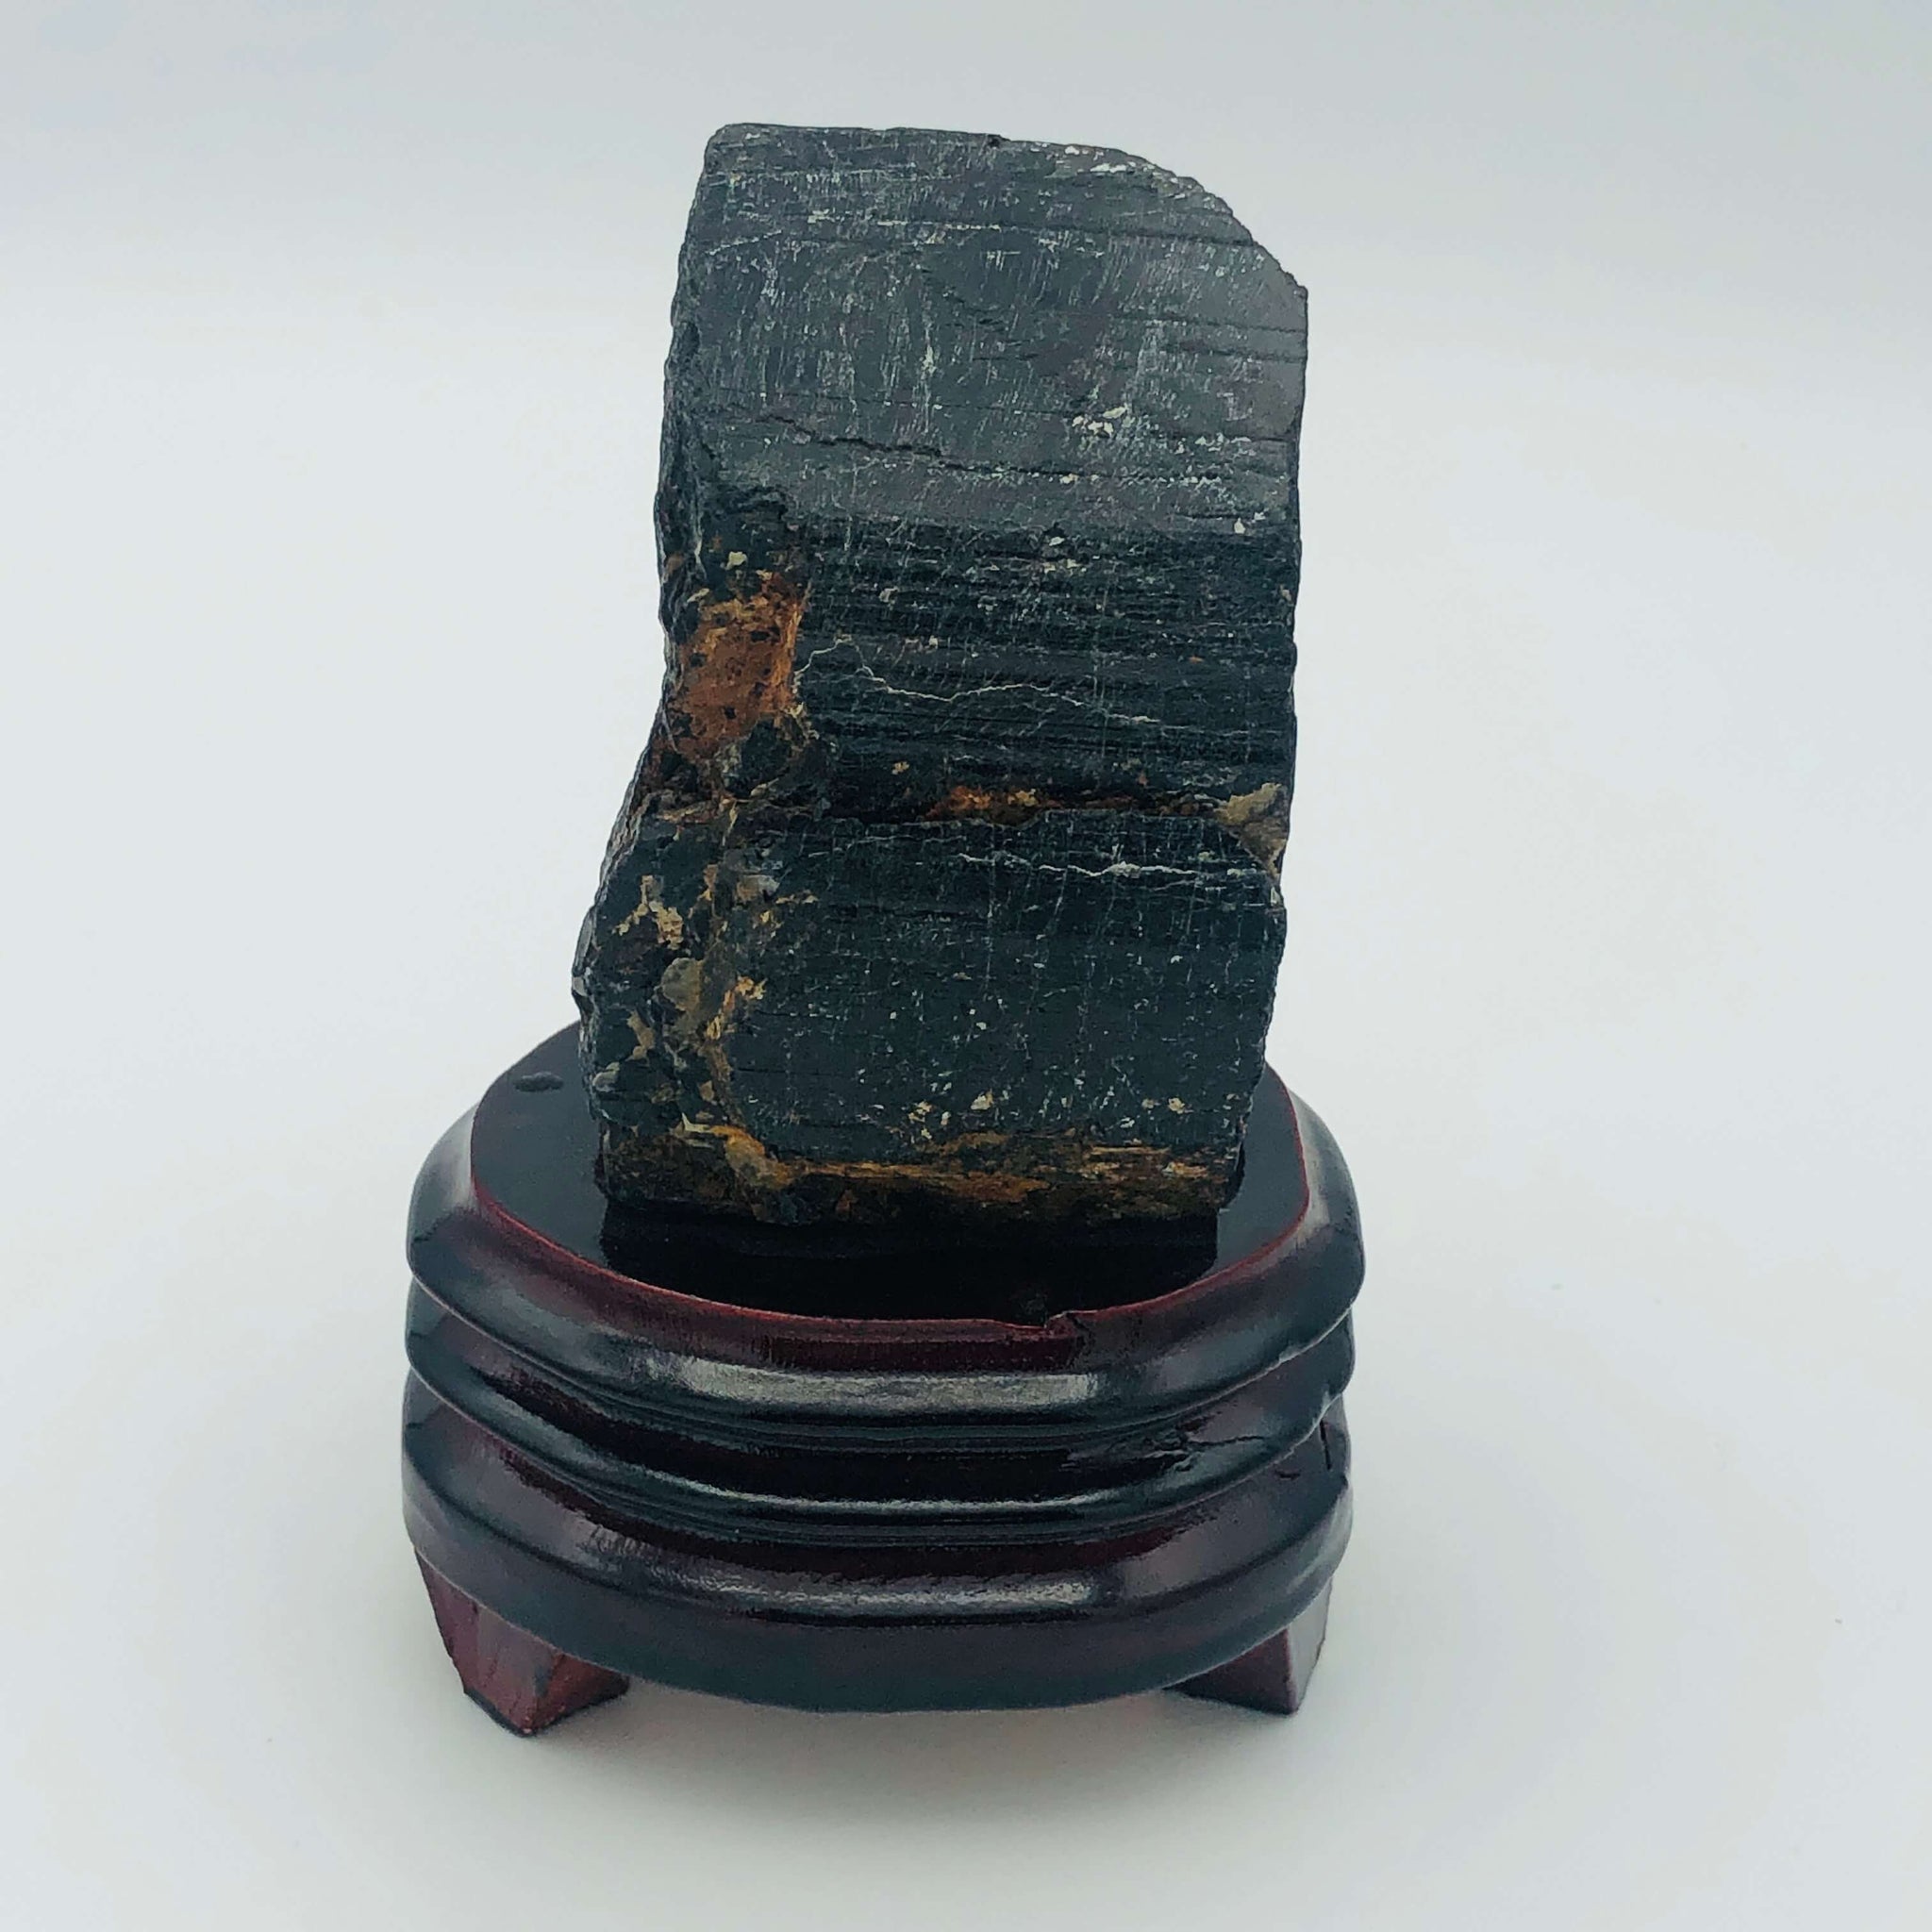 Large Black Tourmaline (Chinese Scholar's Rock)